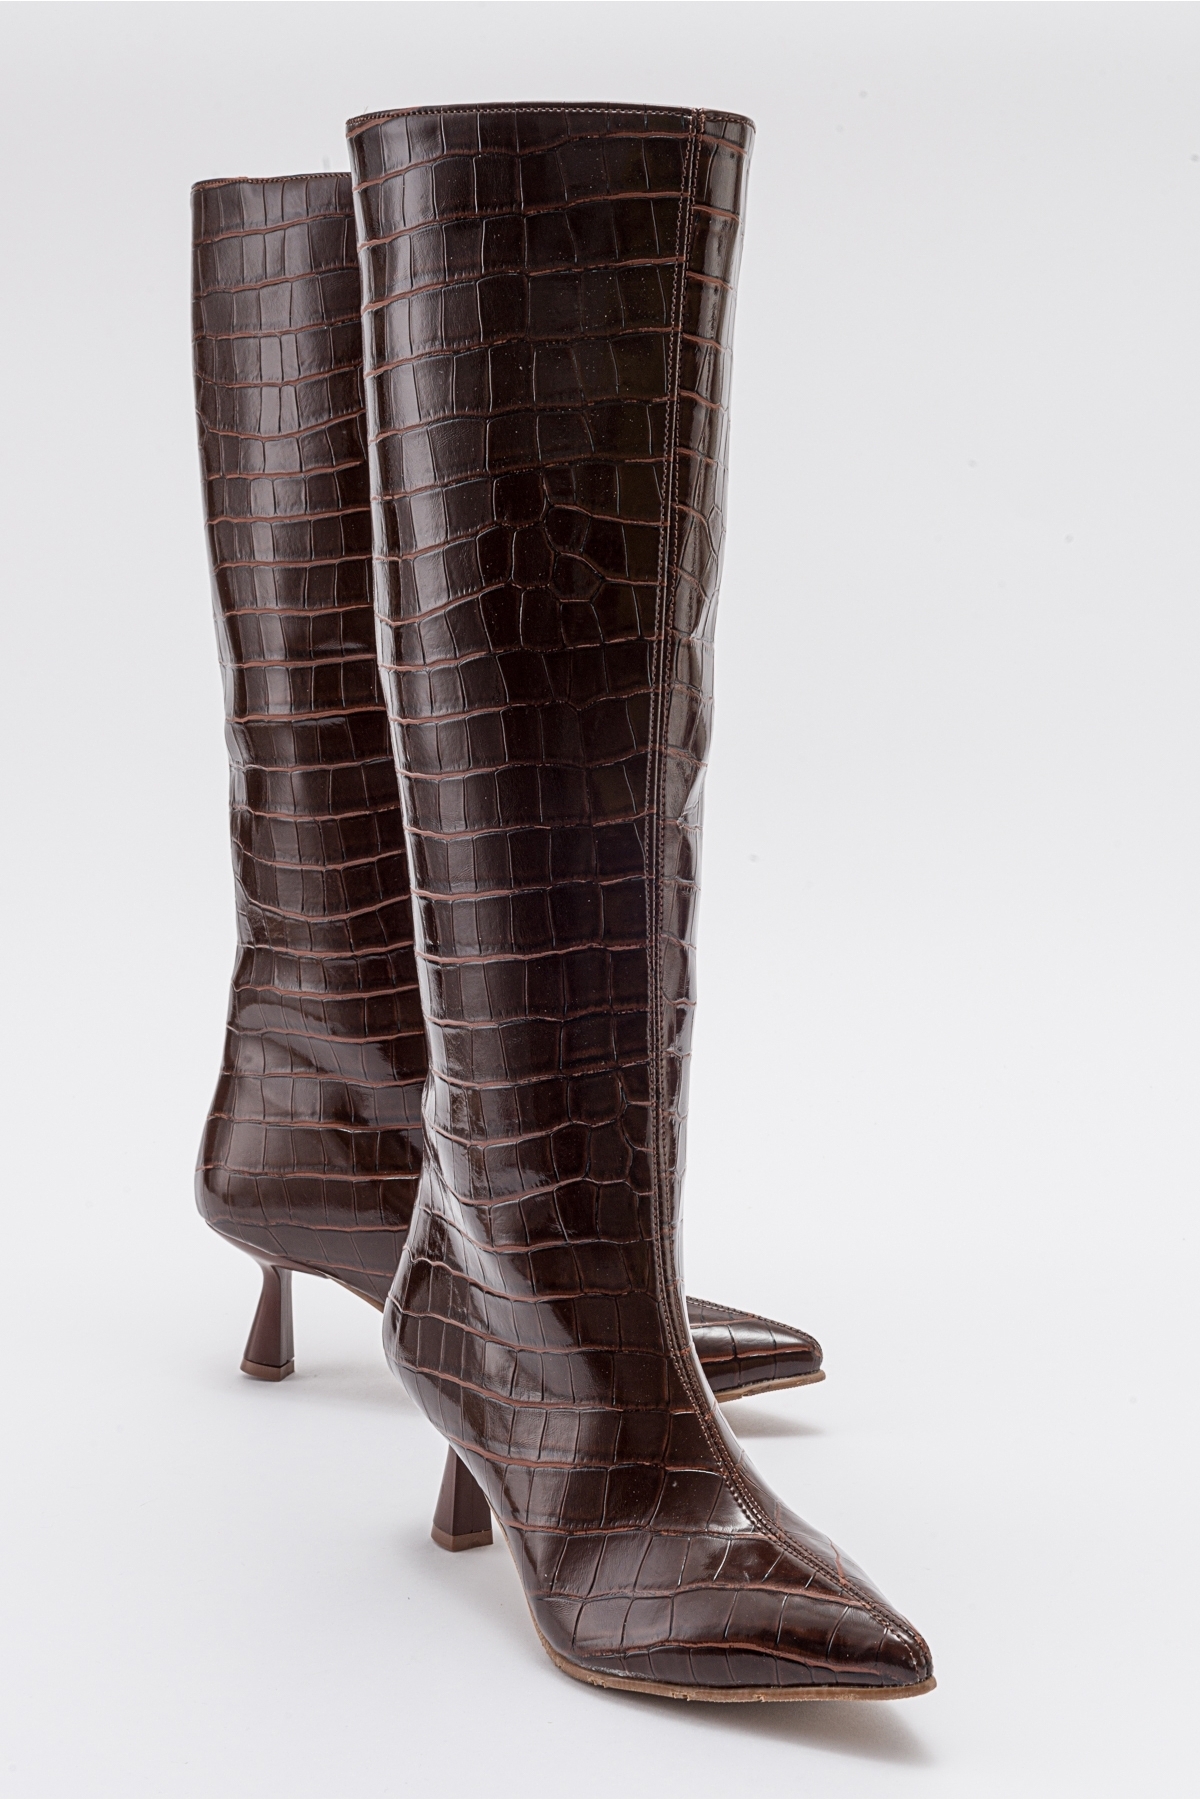 LuviShoes FIDA Tan Printed Women's Boots